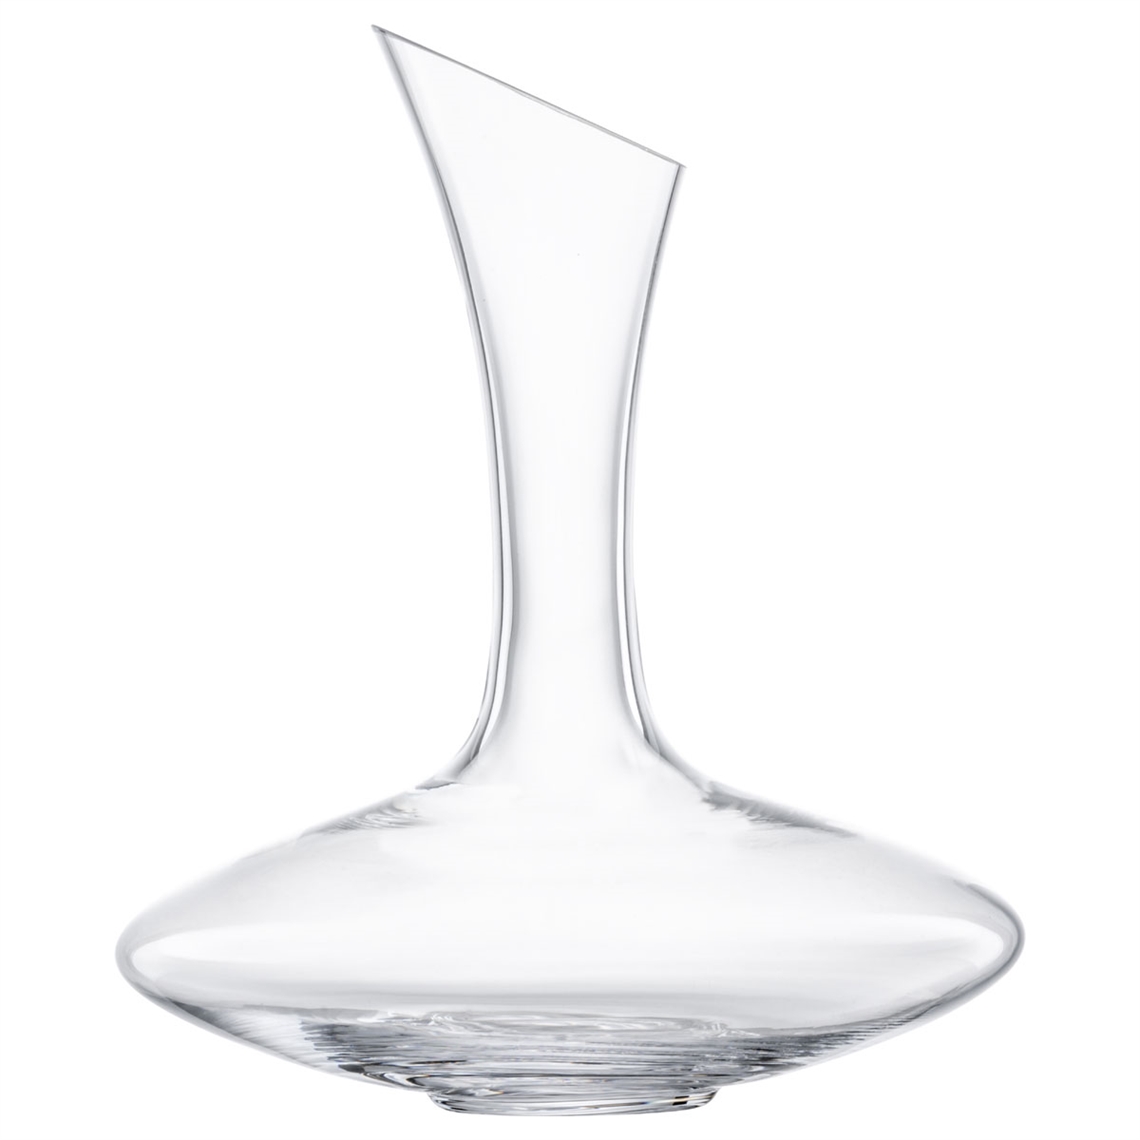 Eisch Glas Crystal Chateau Wine Decanter 1.5L